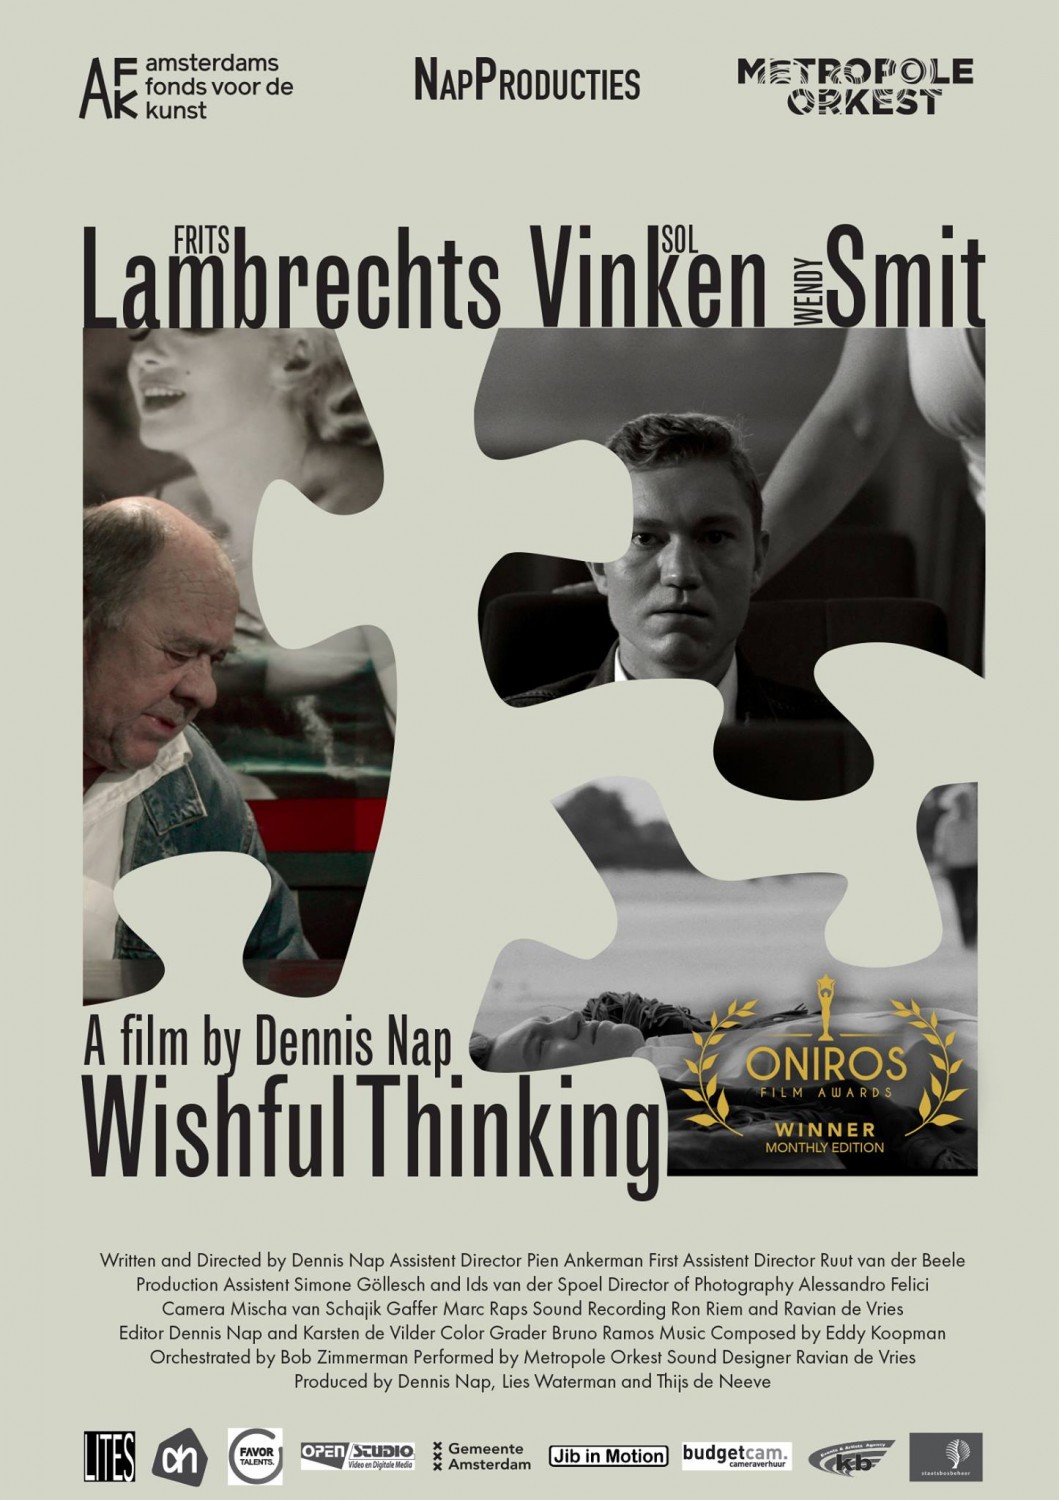 Extra Large Movie Poster Image for Wishful thinking